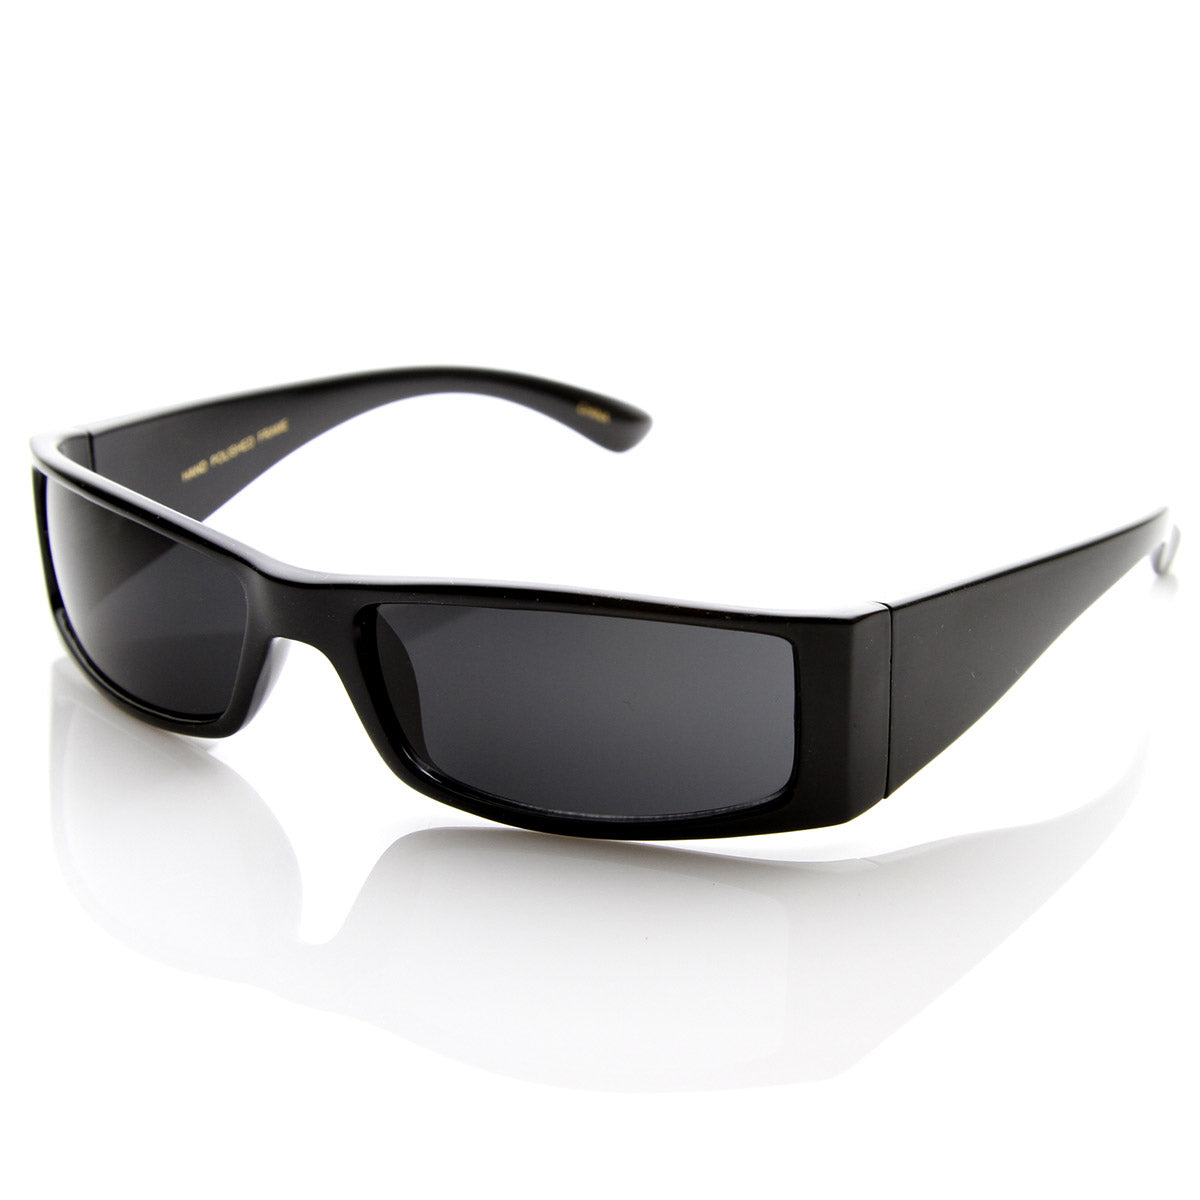 Slim Rectangular Sunglasses, 52mm